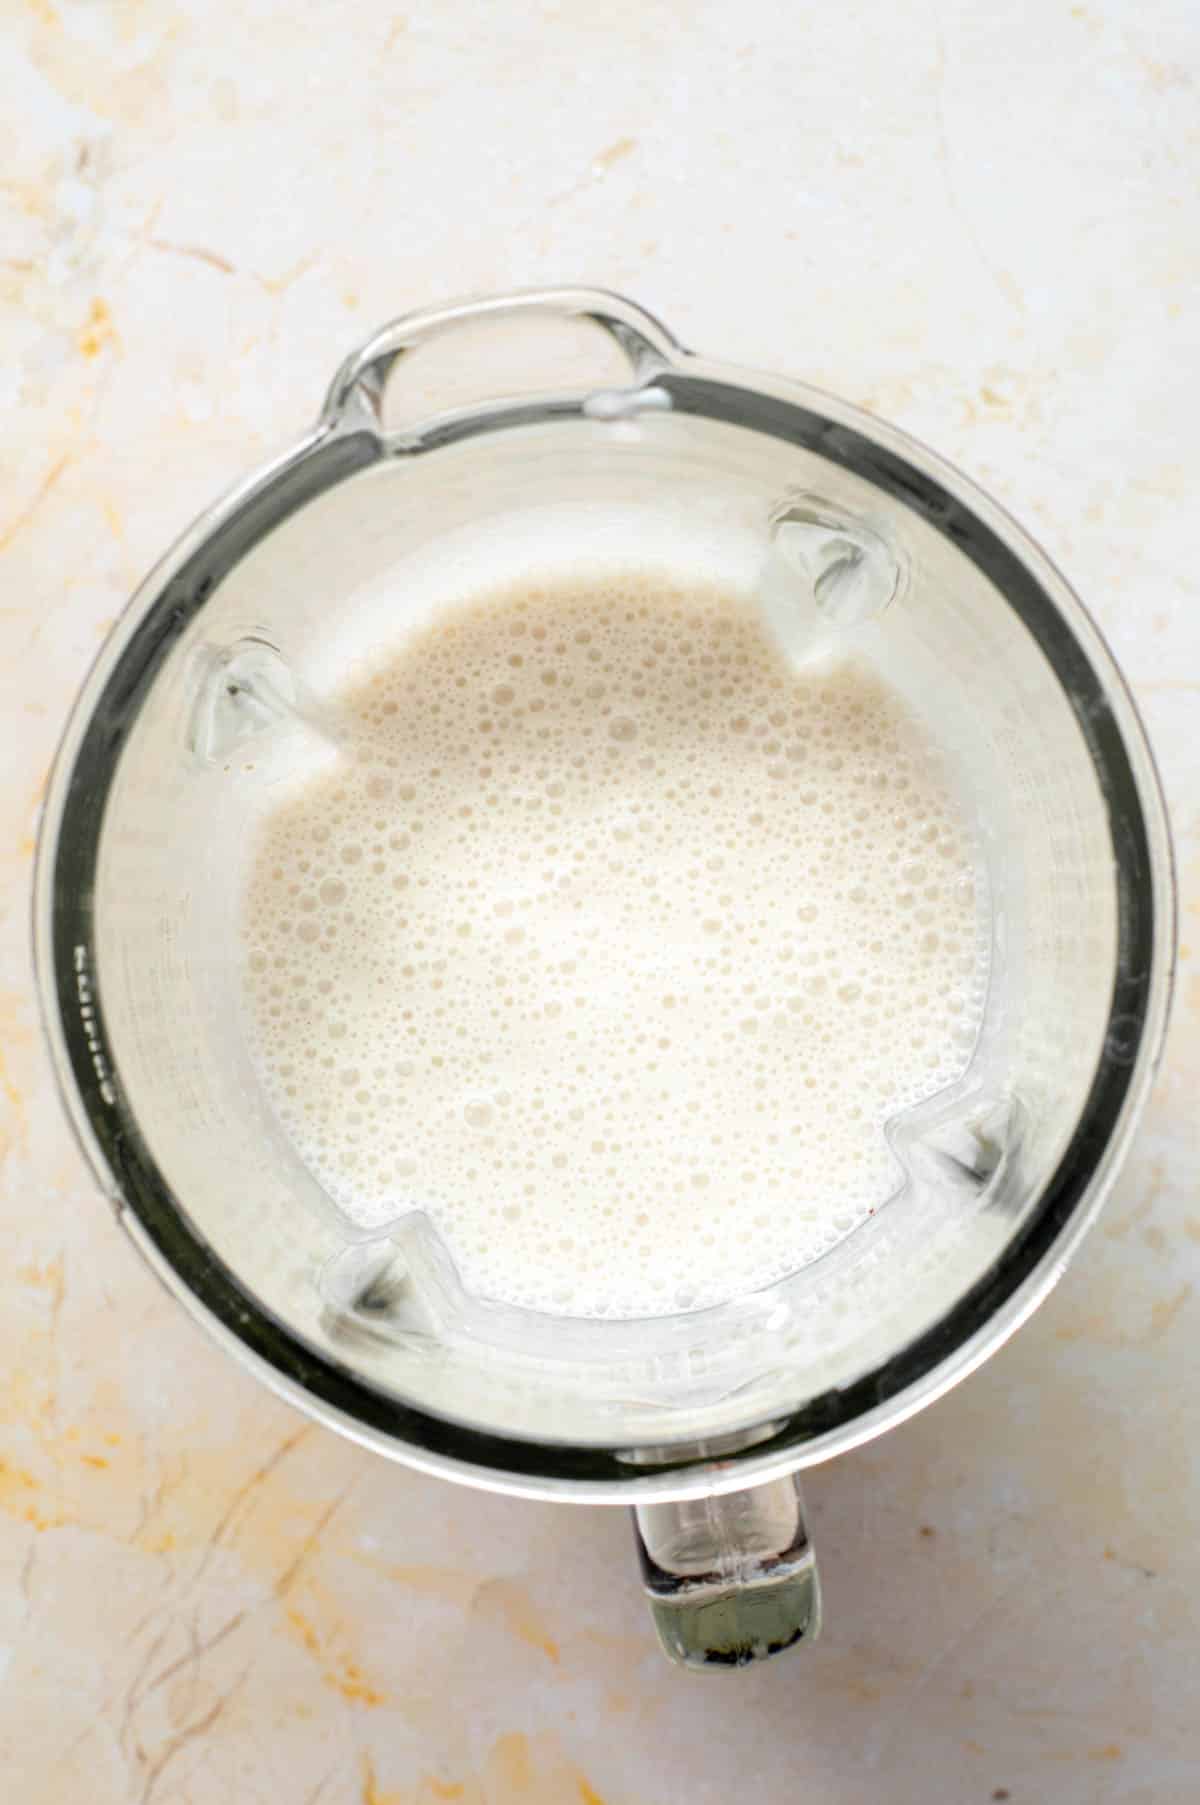 The blended up coconut shake in a blender pitcher.